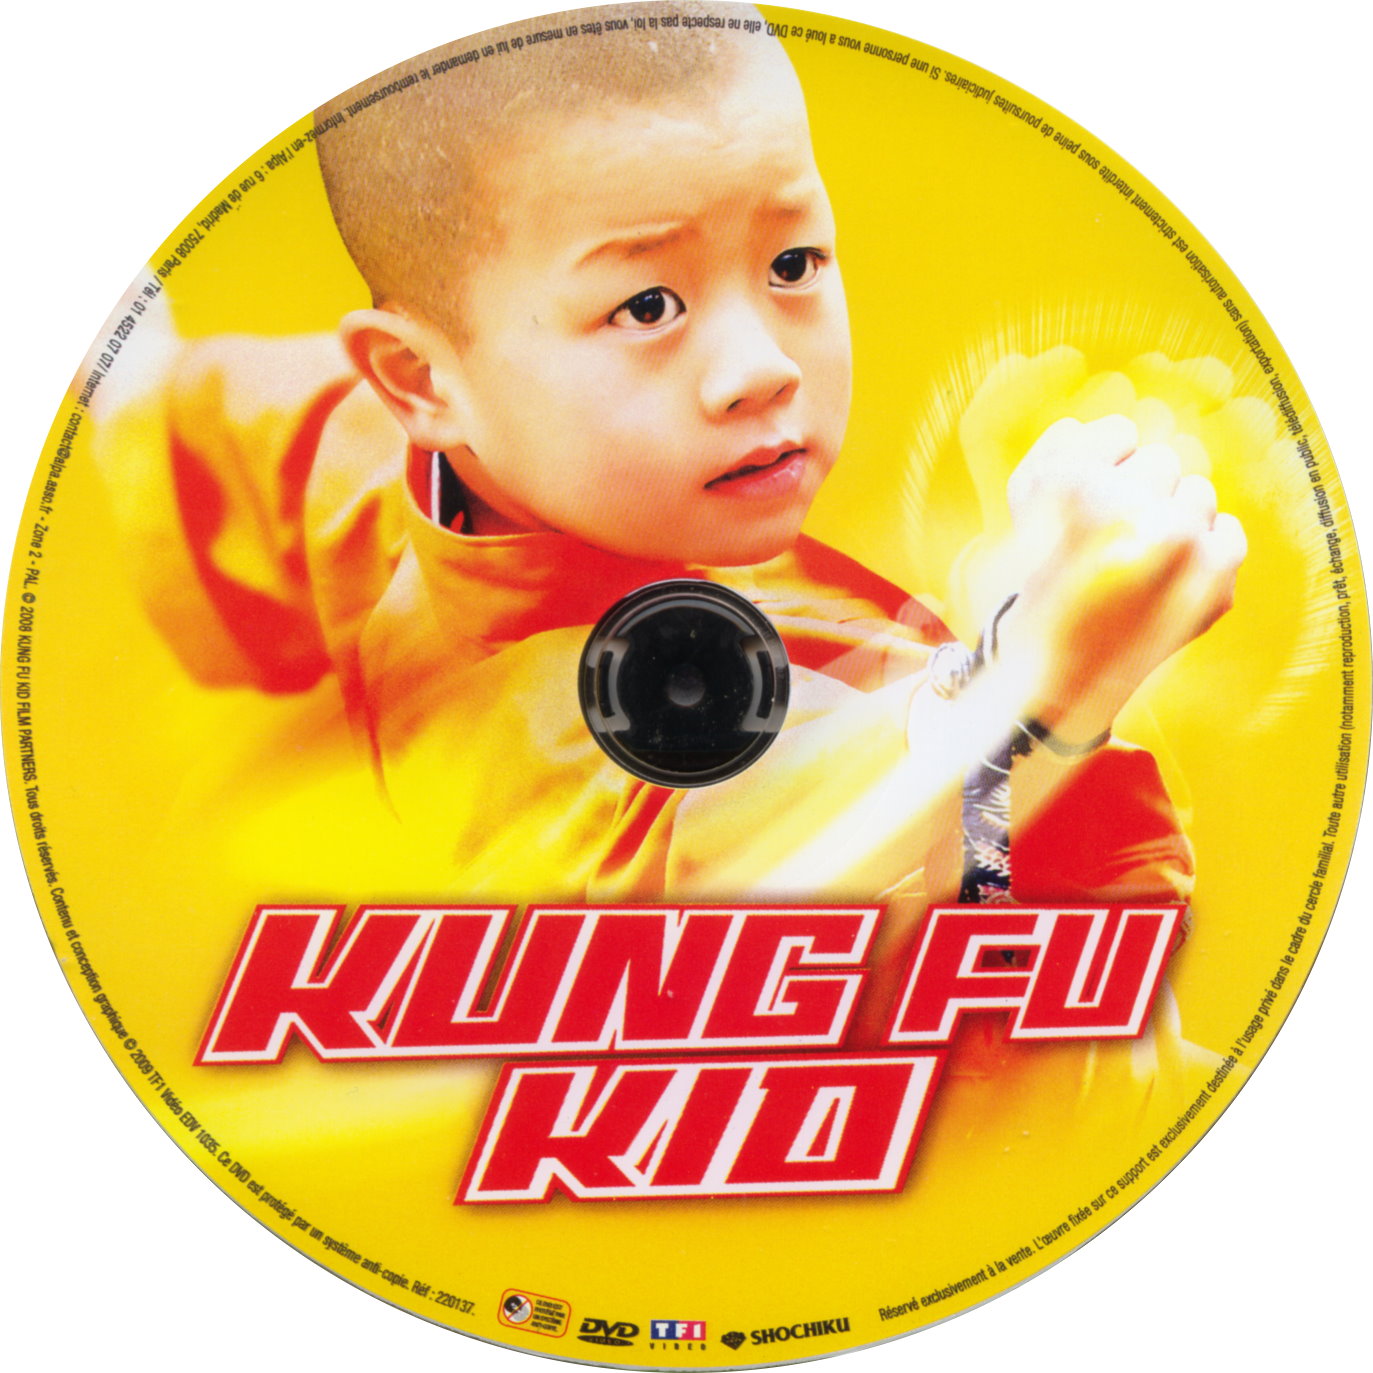 Kung fu kid